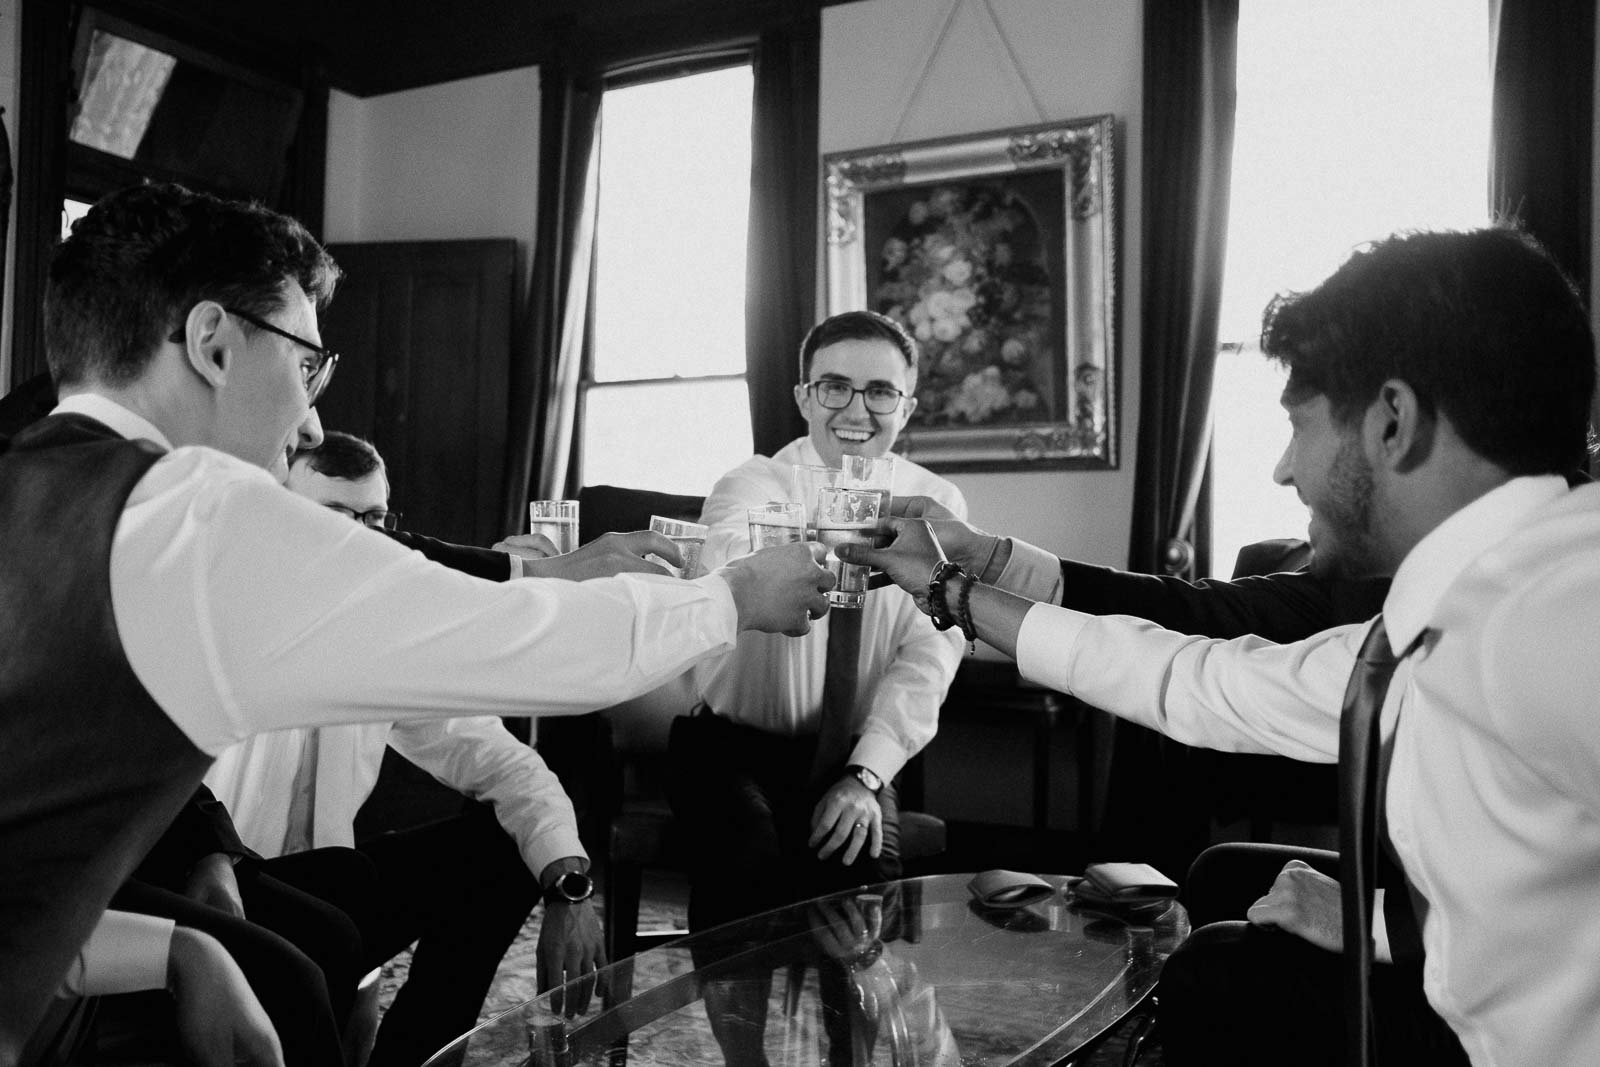 Groomsmen raise their glasses in a toast